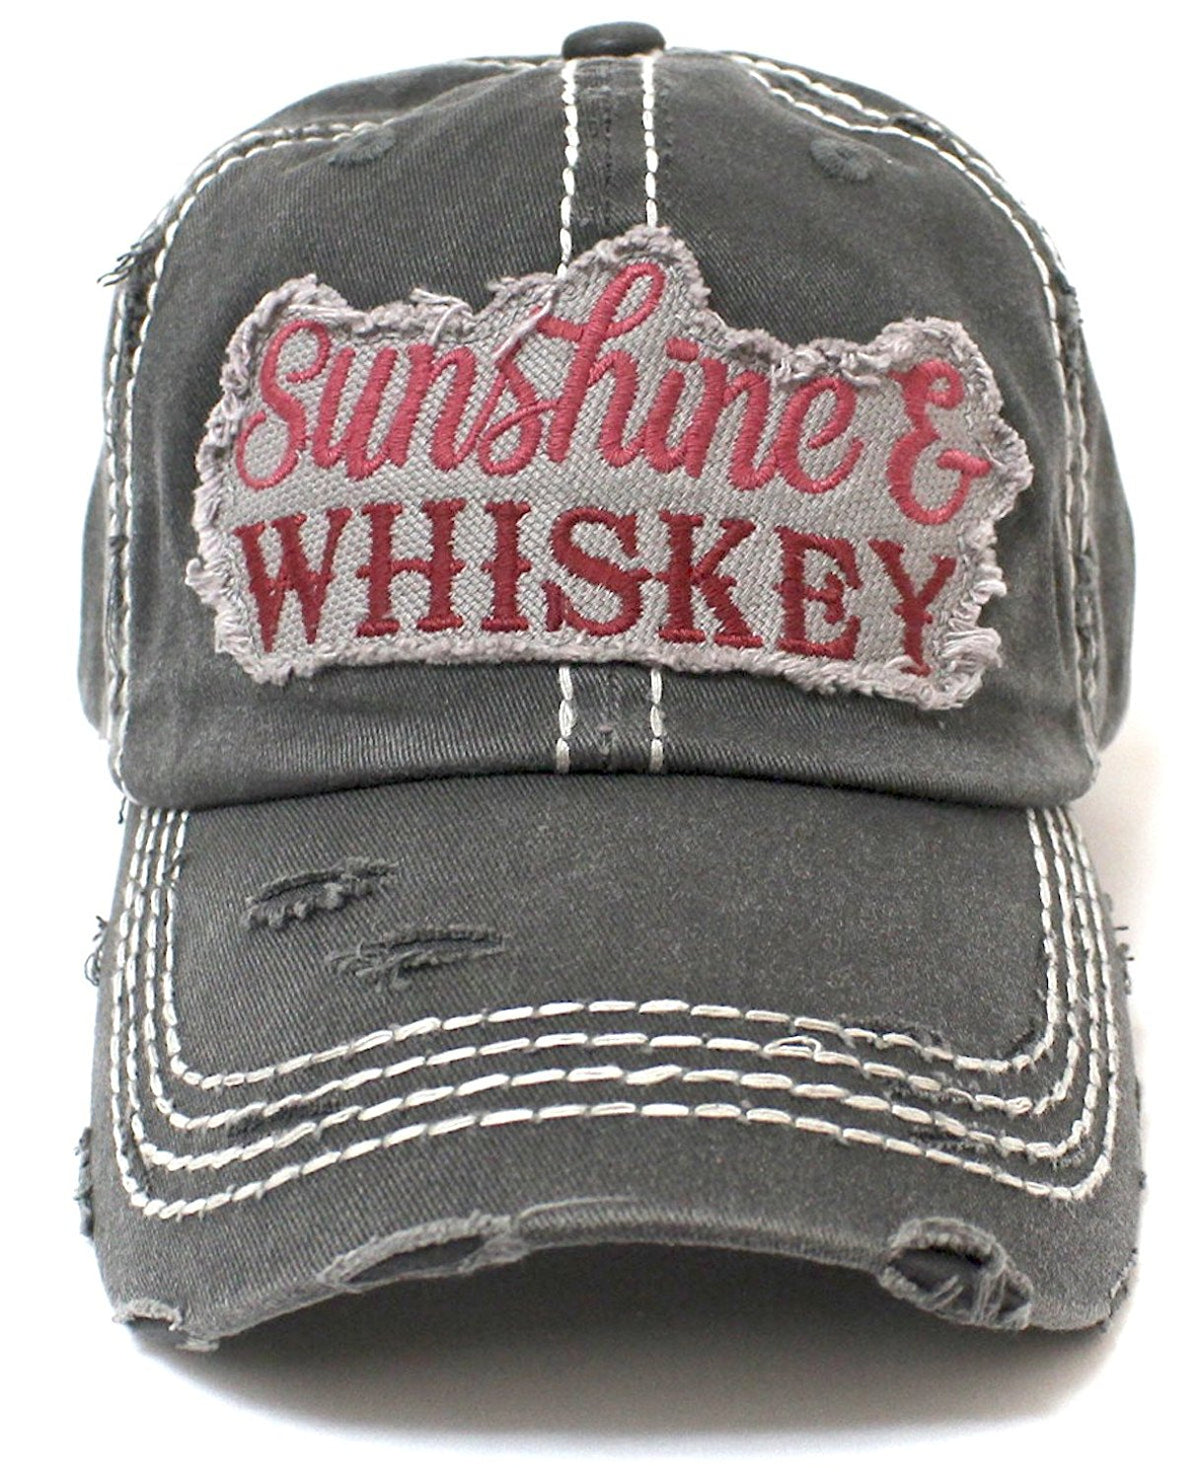 NEW!! "Sunshine & Whiskey" Distressed Vintage Hat - Caps 'N Vintage 